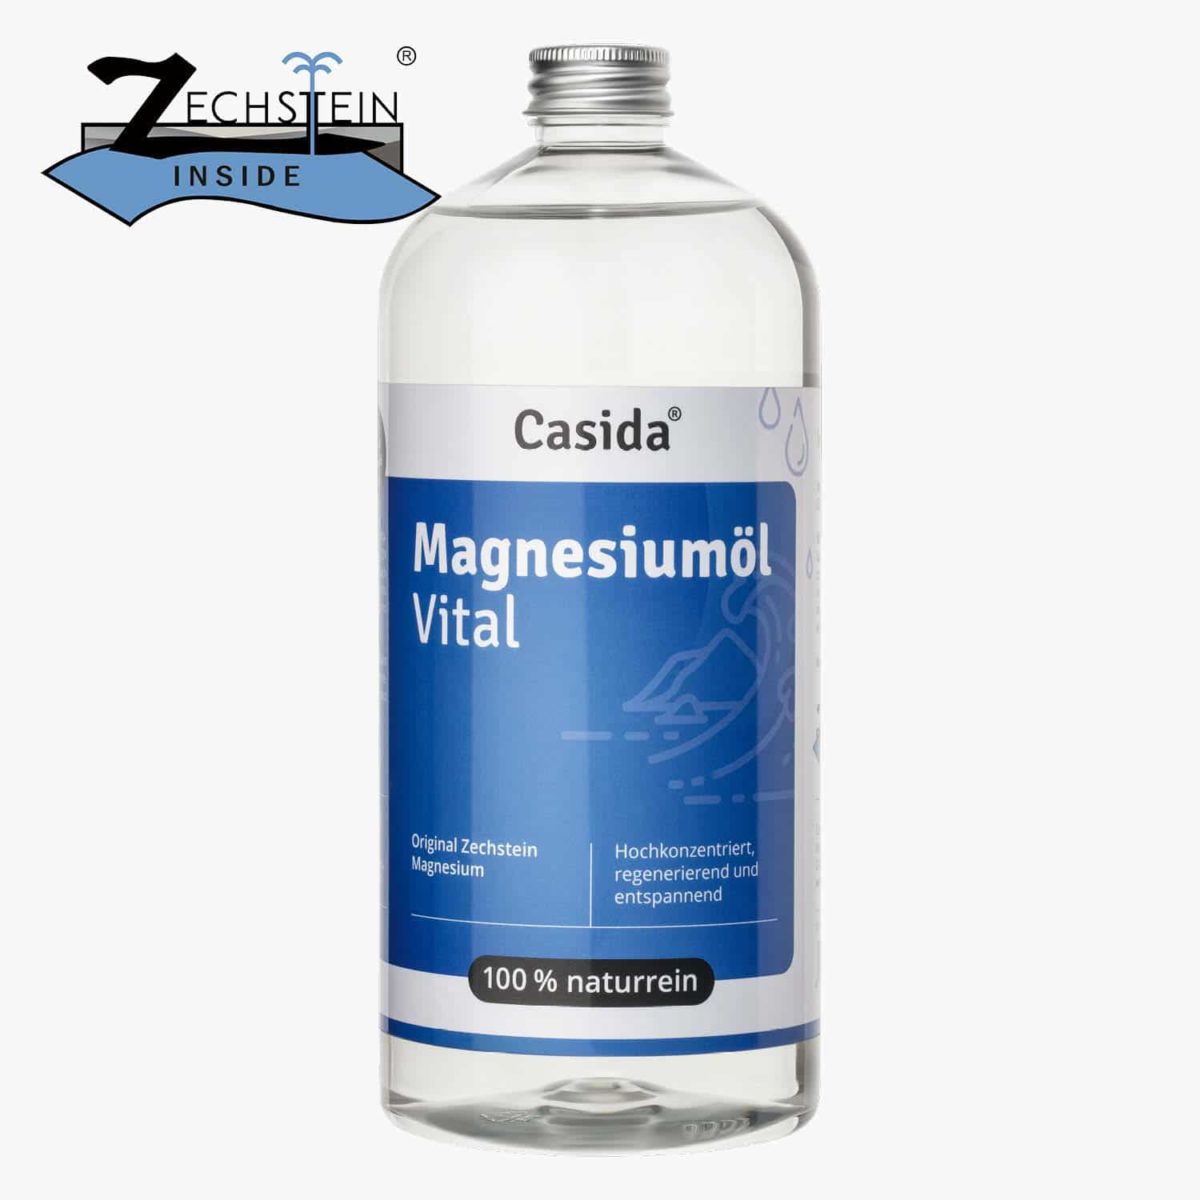 Casida Magnesiumöl Vital Zechstein 1000 ml PZN DE 11730233 PZN AT 4483426 PZN CH 7236214 UVP 26,95 € EAN 4260518460086